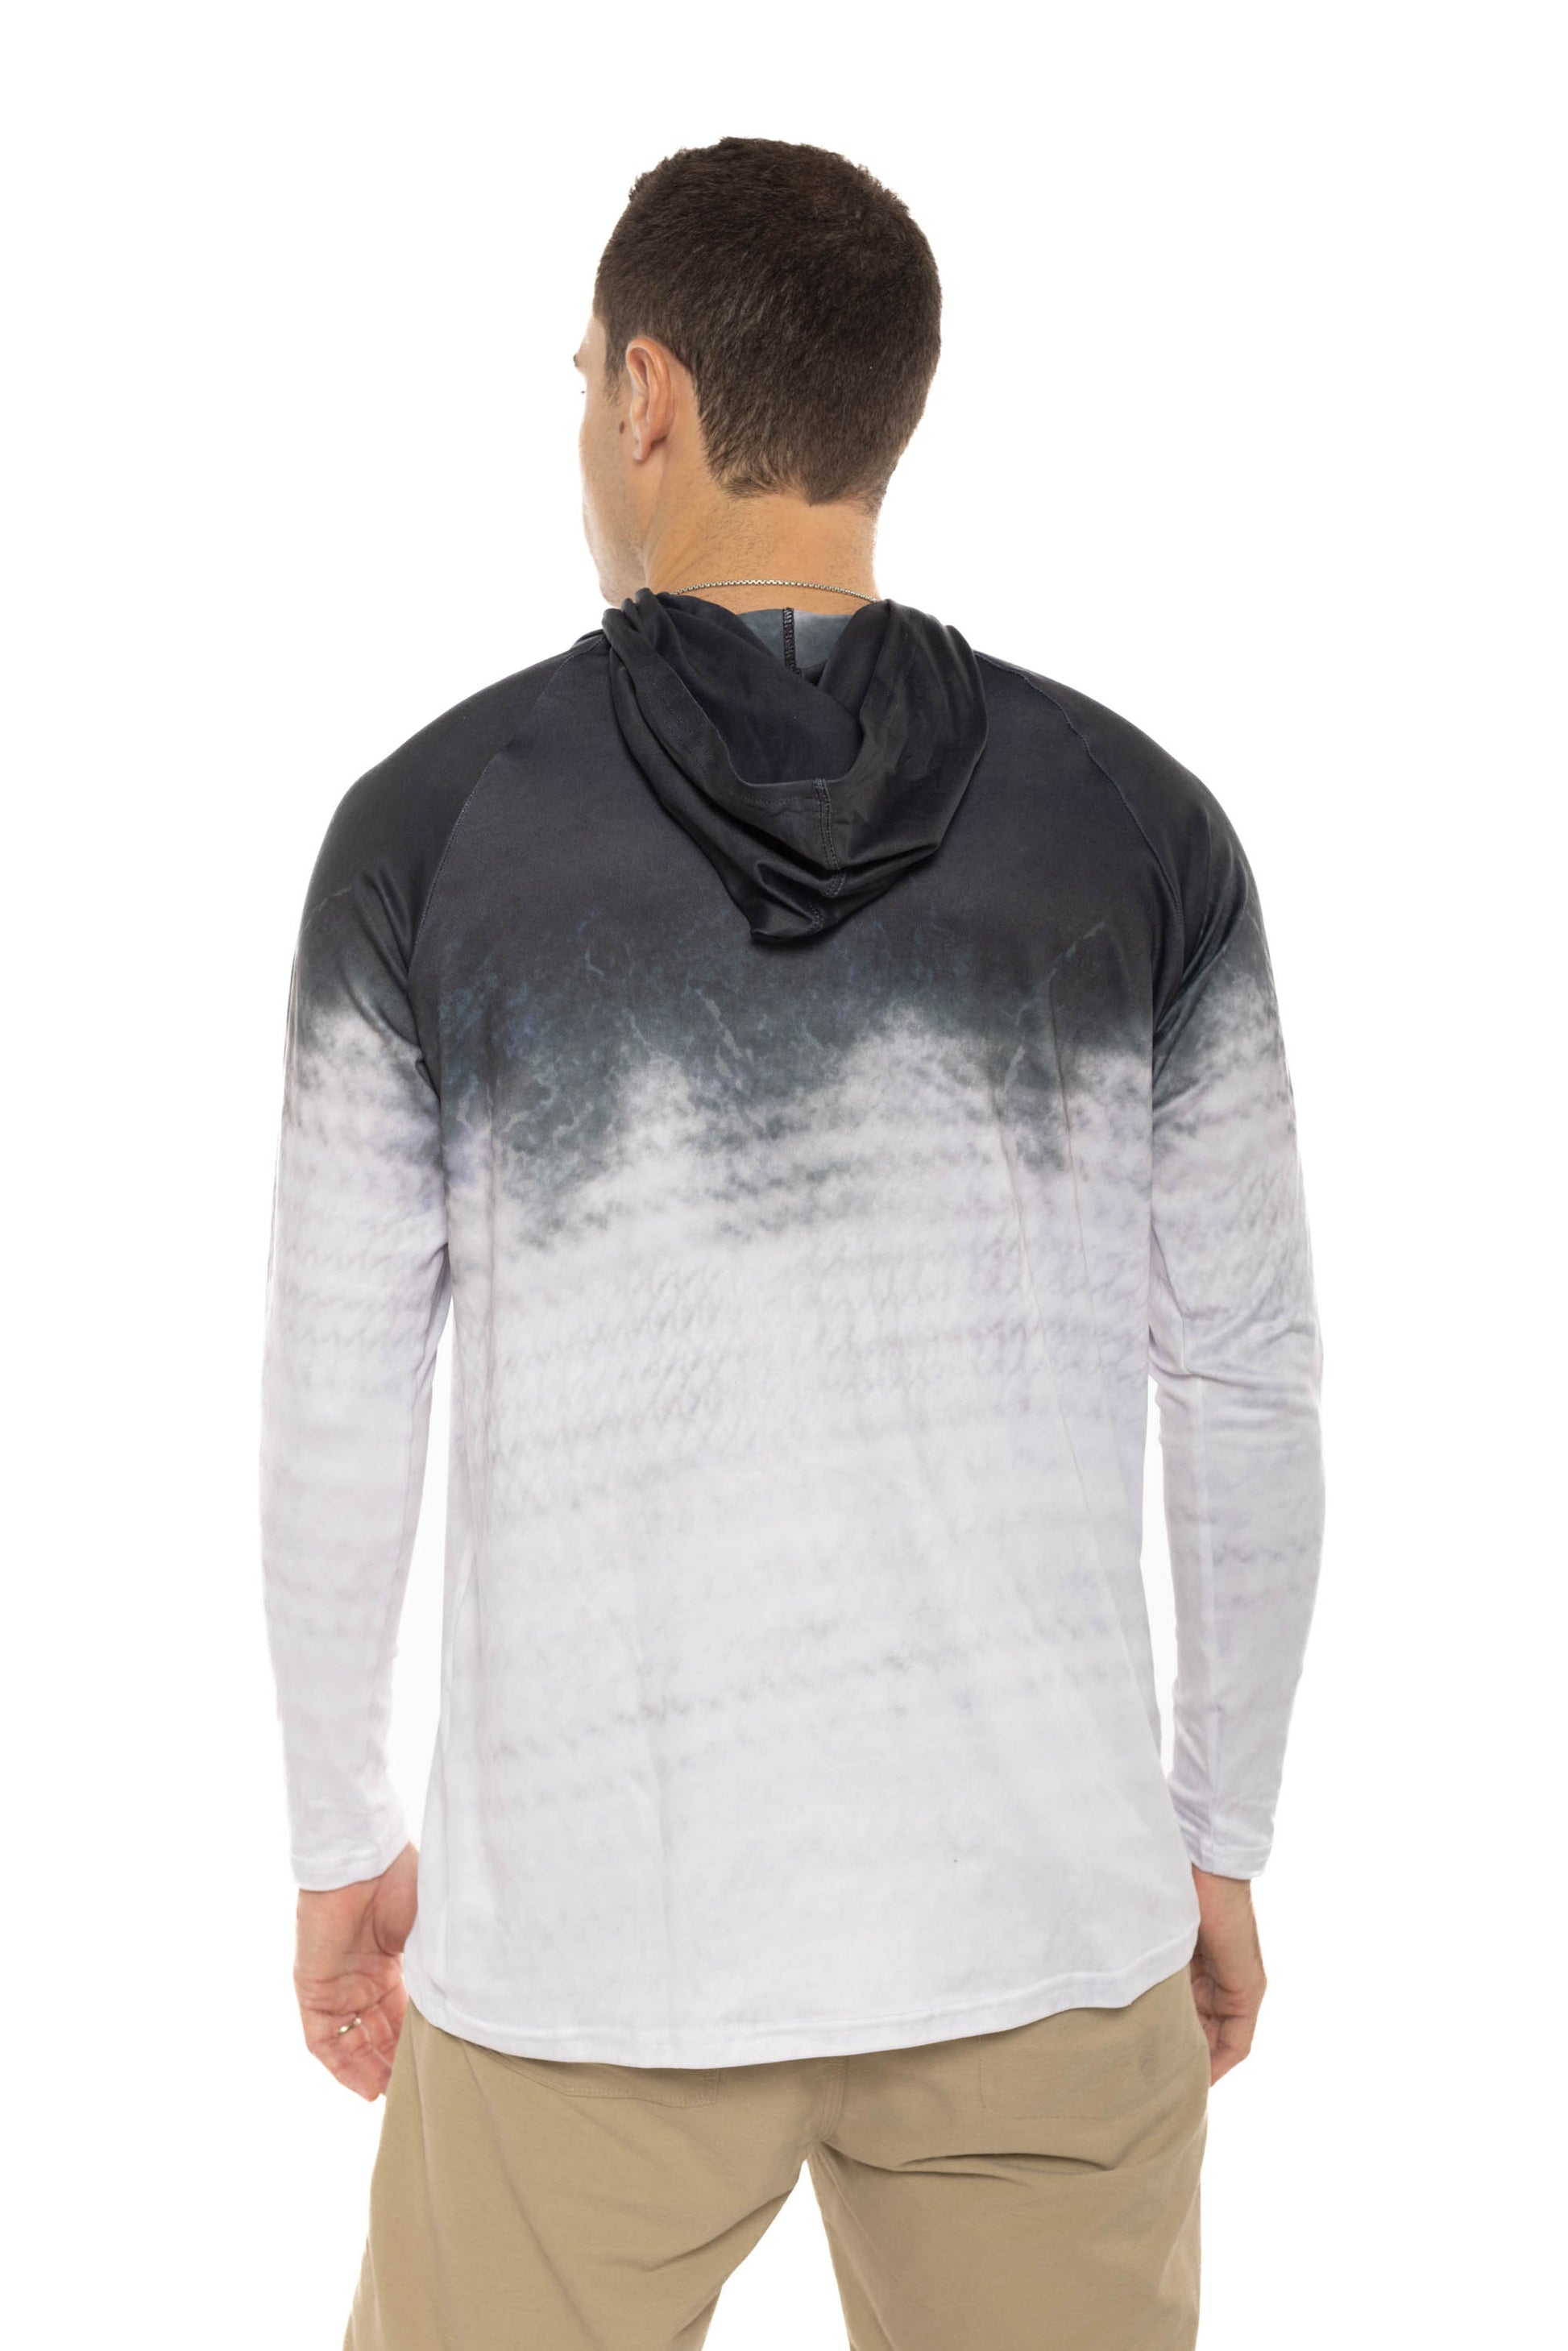 SEATEC Sport Tec Shirt Mens XXXXL Hooded Sun Hoodie Fishing Paint Splatter